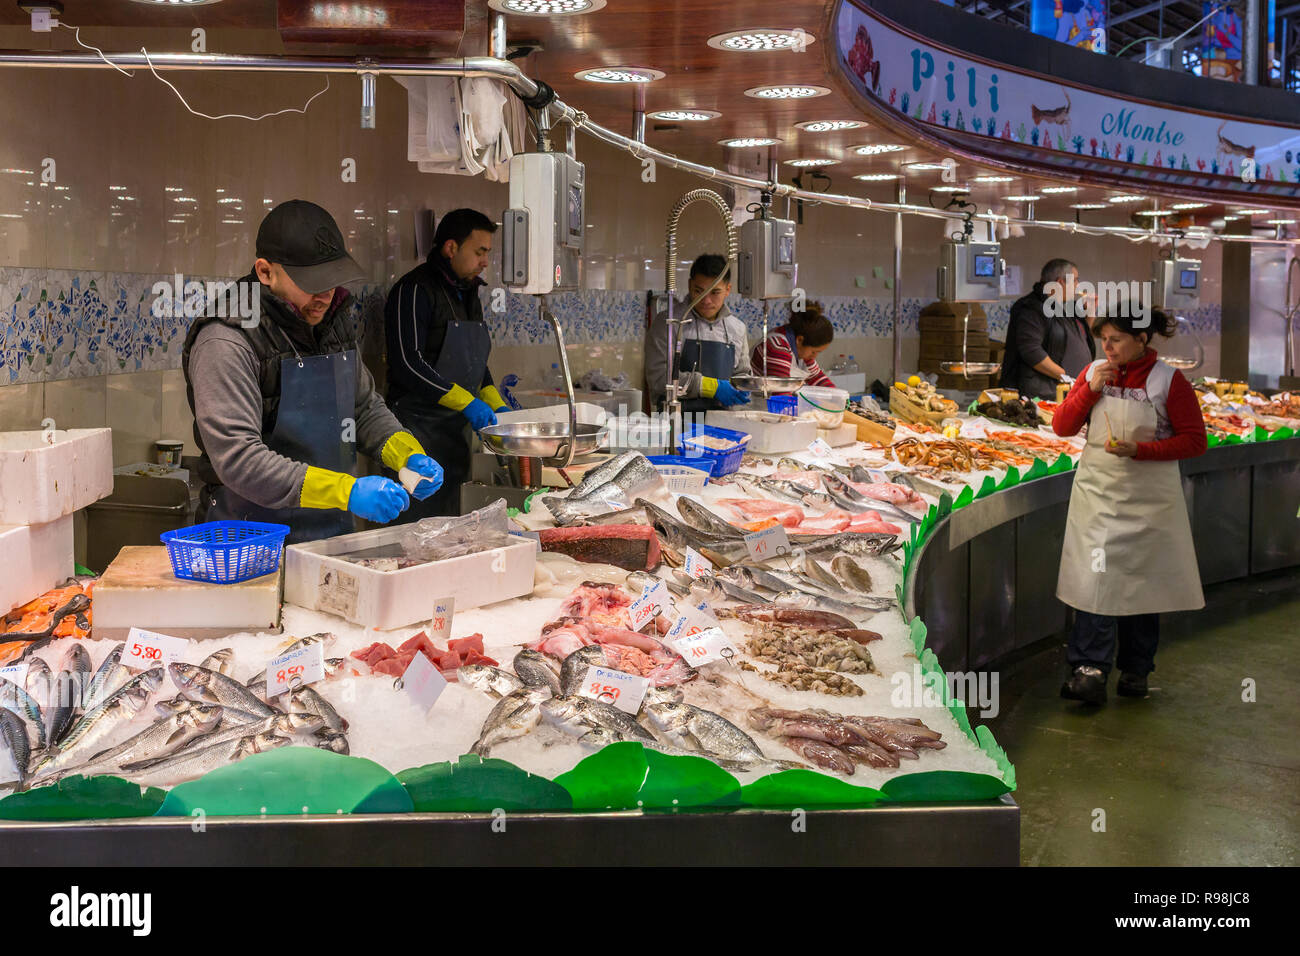 Barcelona, Spain - March 27, 2018: Seafood market at Mercat de Sant Josep de la Boqueria, a large public market in Barcelona, Spain Stock Photo